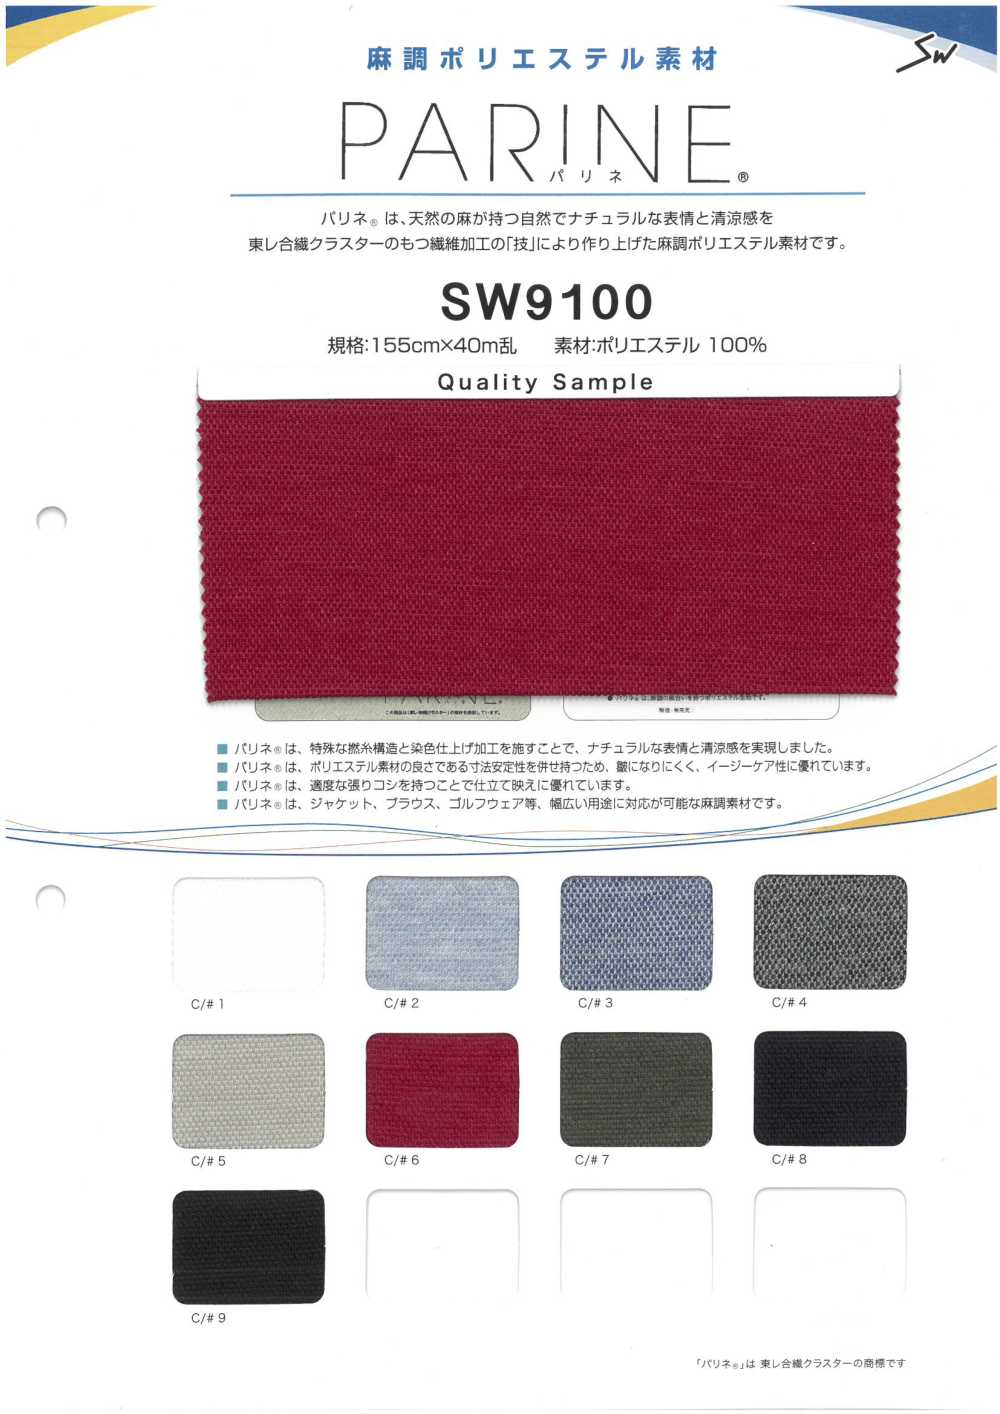 SW9100 Parine[Vải] Dệt May Sanwa